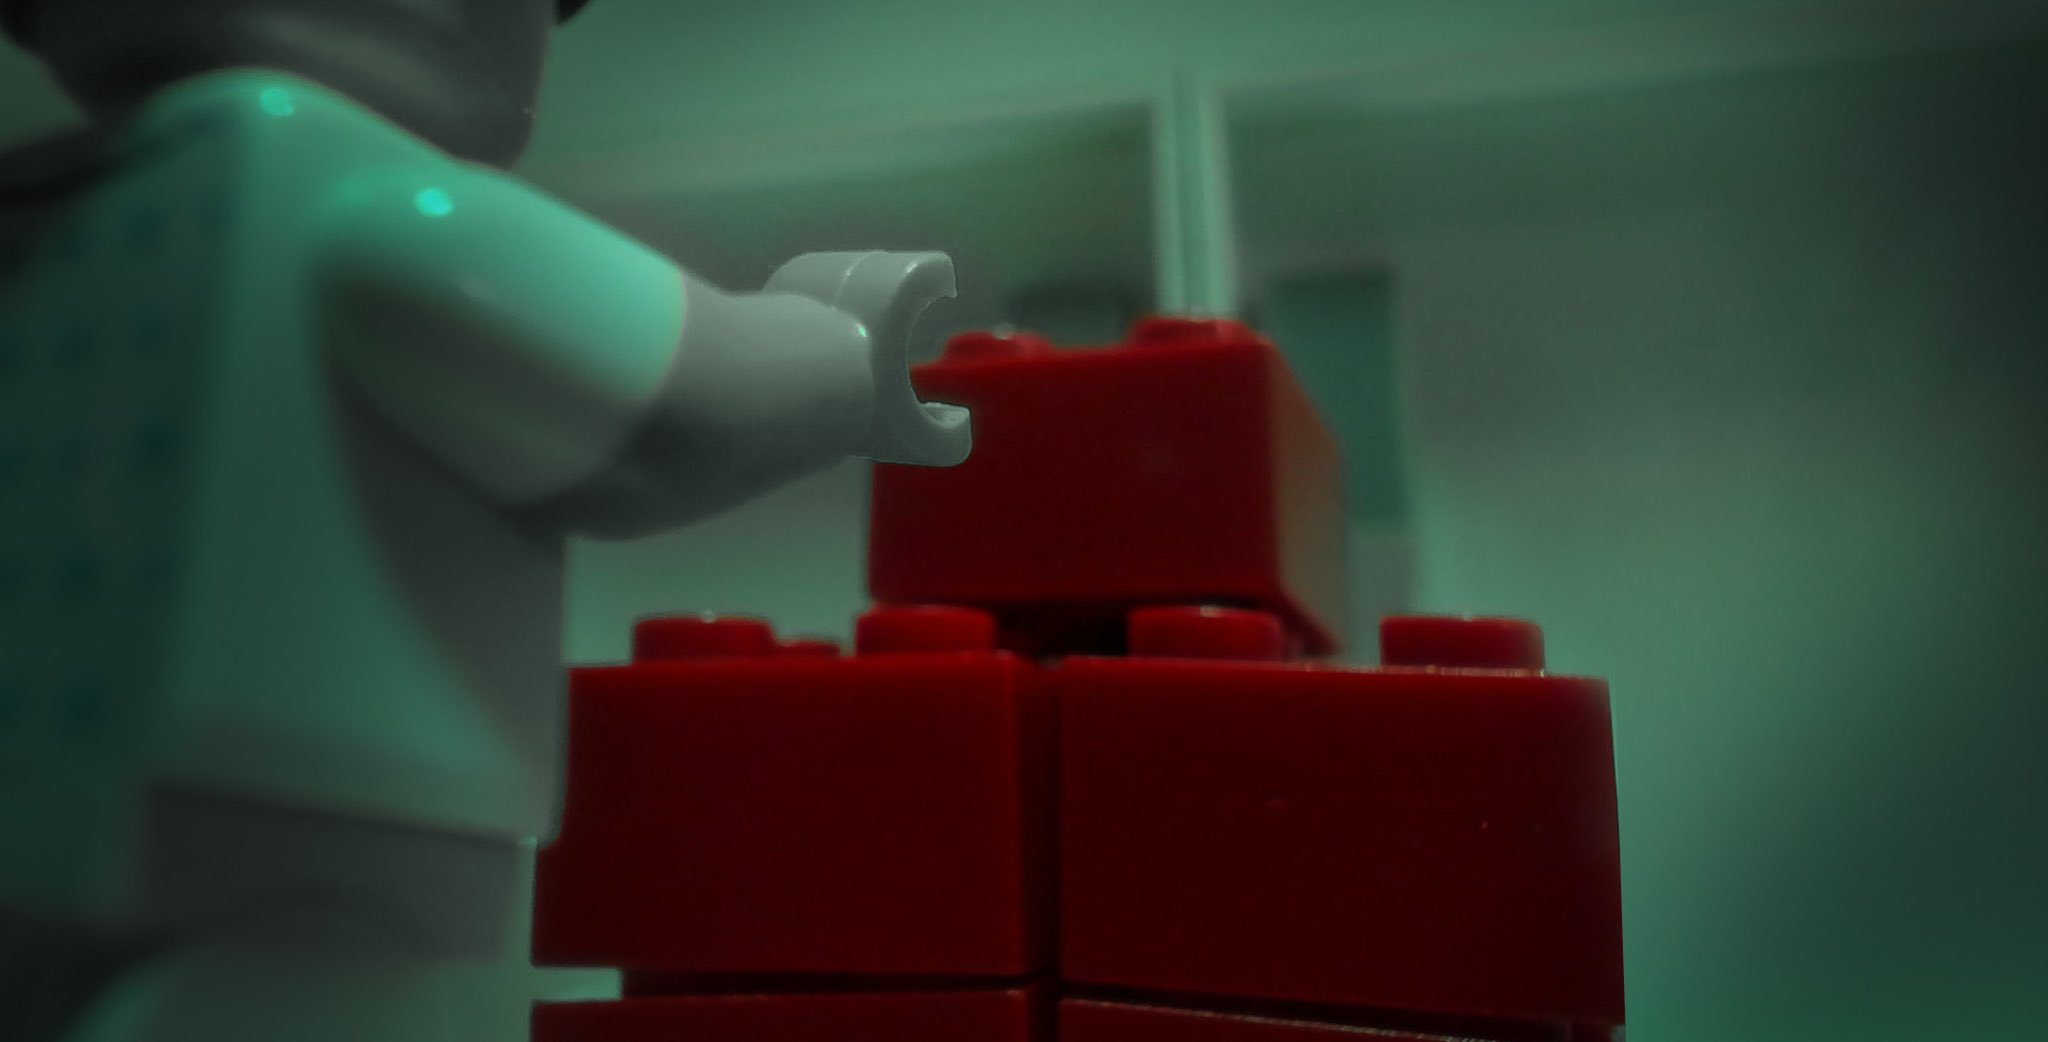 Lego Barb : r/StrangerThings